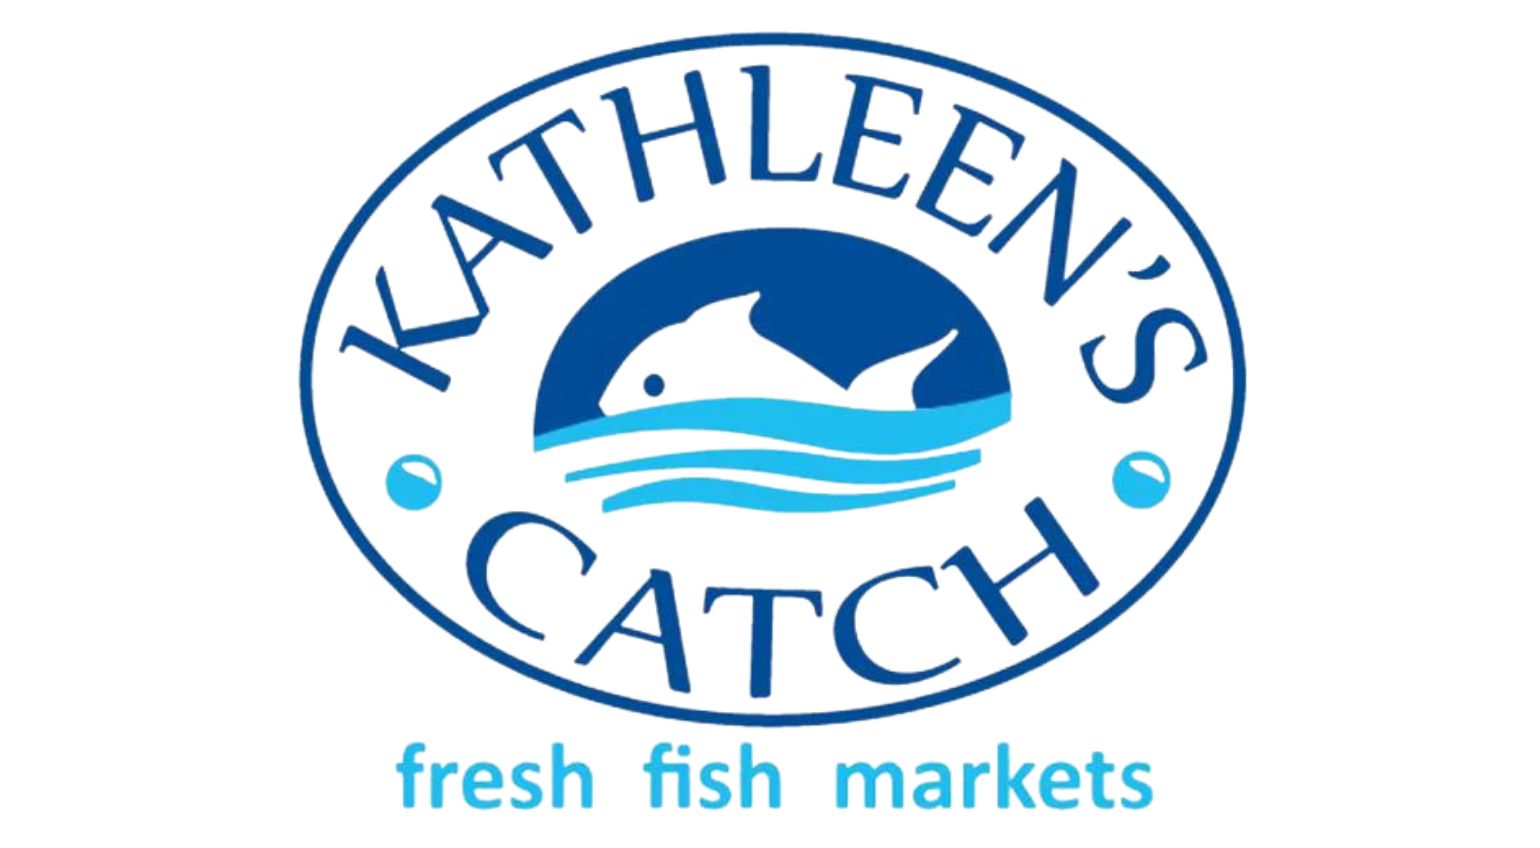 Kathleens Catch 